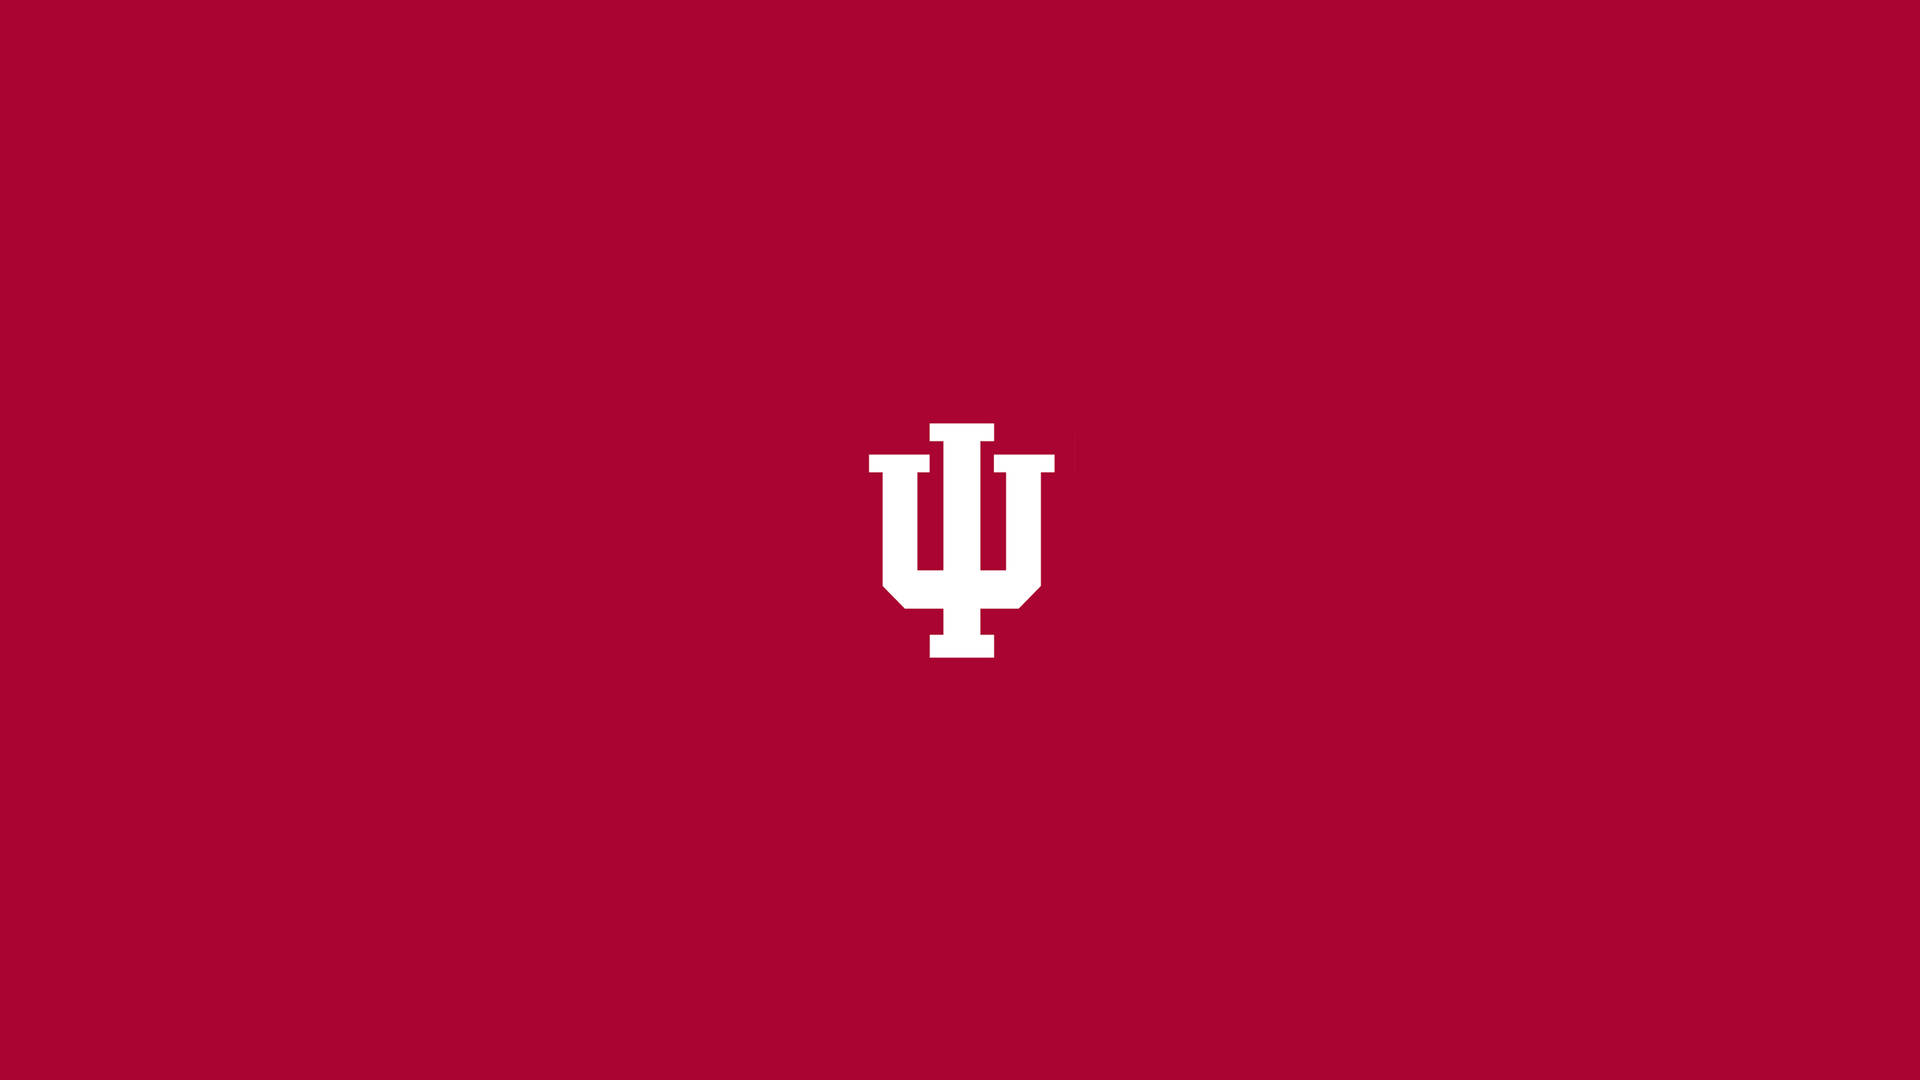 Indiana University Purdue University Indianapolis Wallpaper